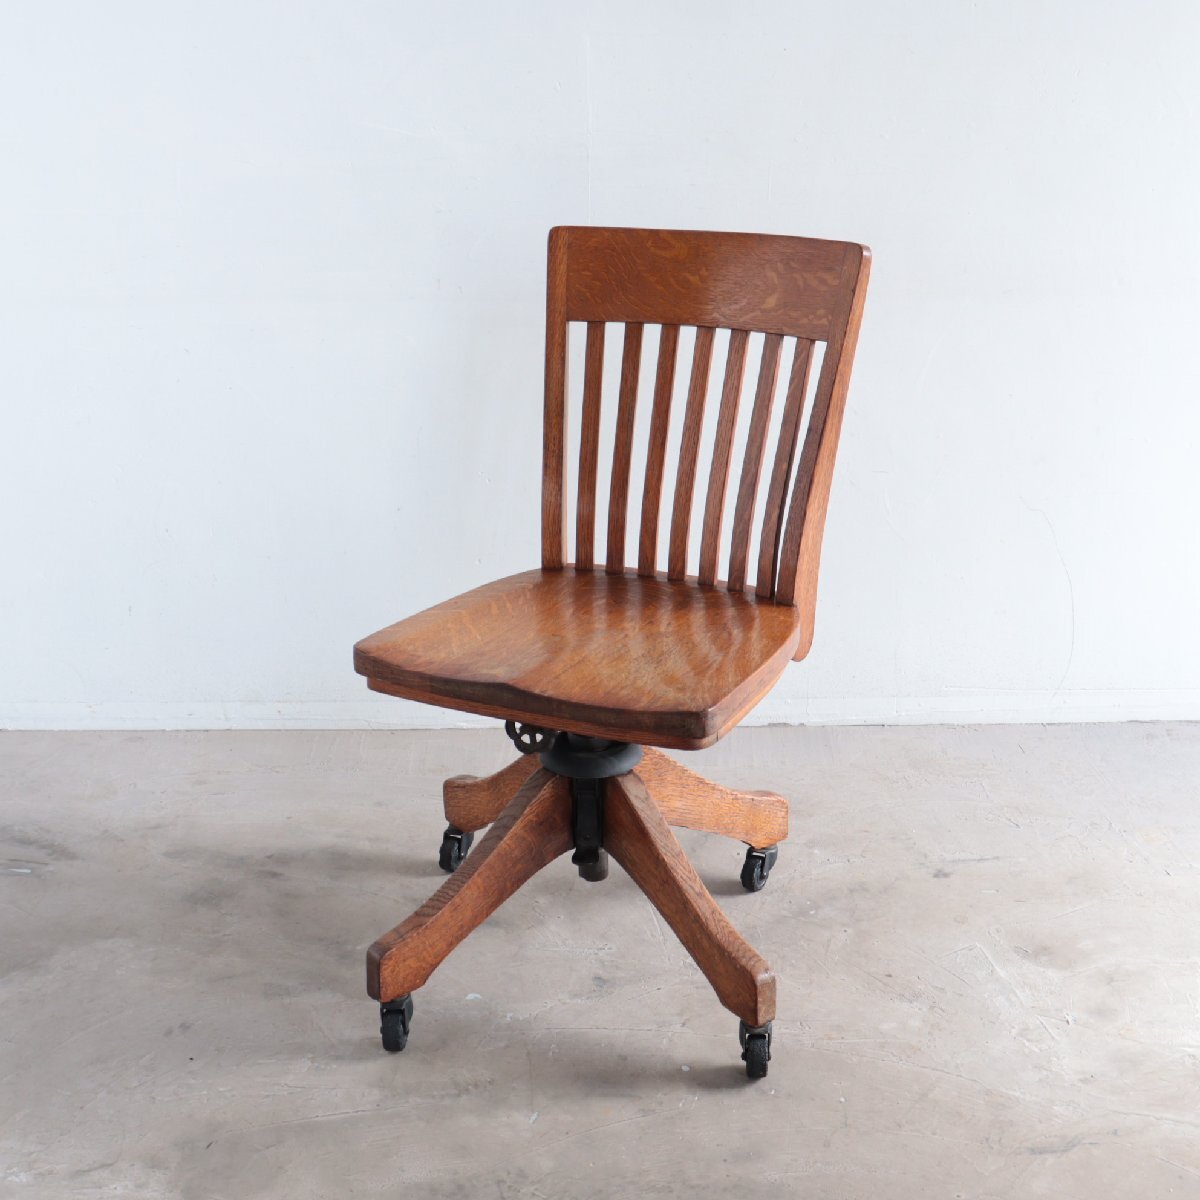 50s アメリカ ヴィンテージ デスクチェア / アンティーク 木製 椅子 チェア 店舗什器 オーク材 USA インテリア #506-039-144_画像1